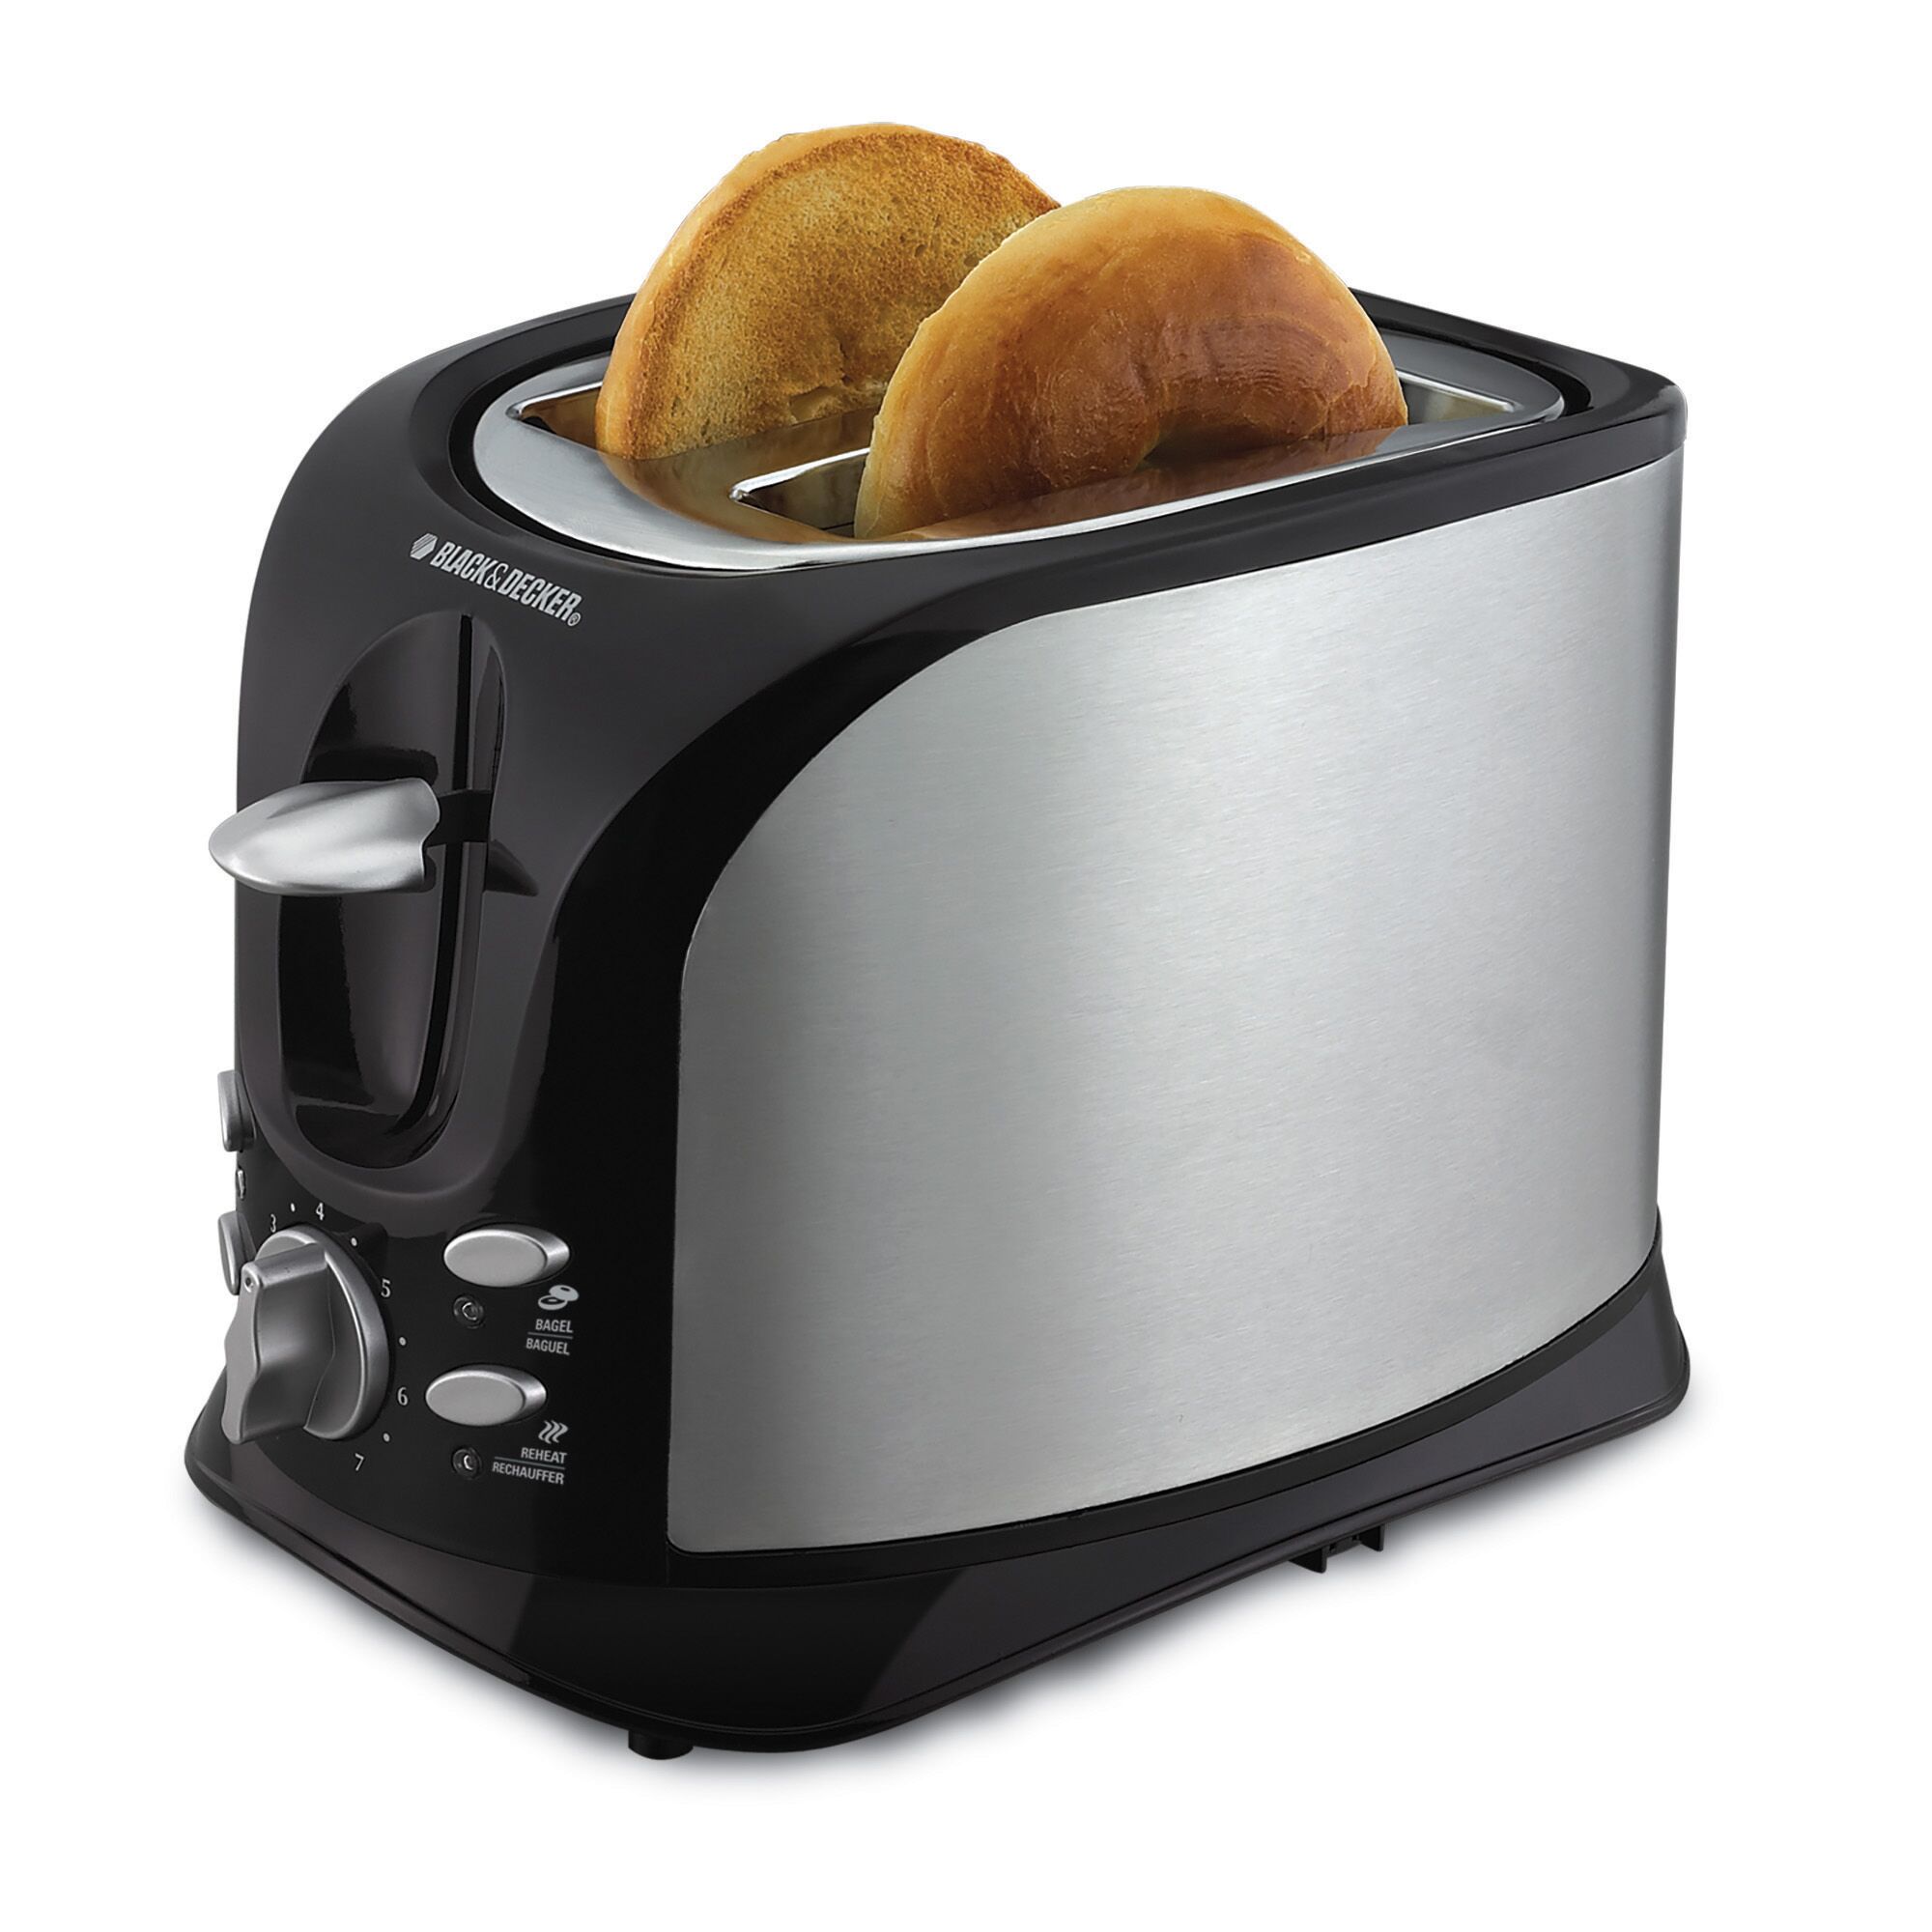 2 Slice Toaster with bagels inside.